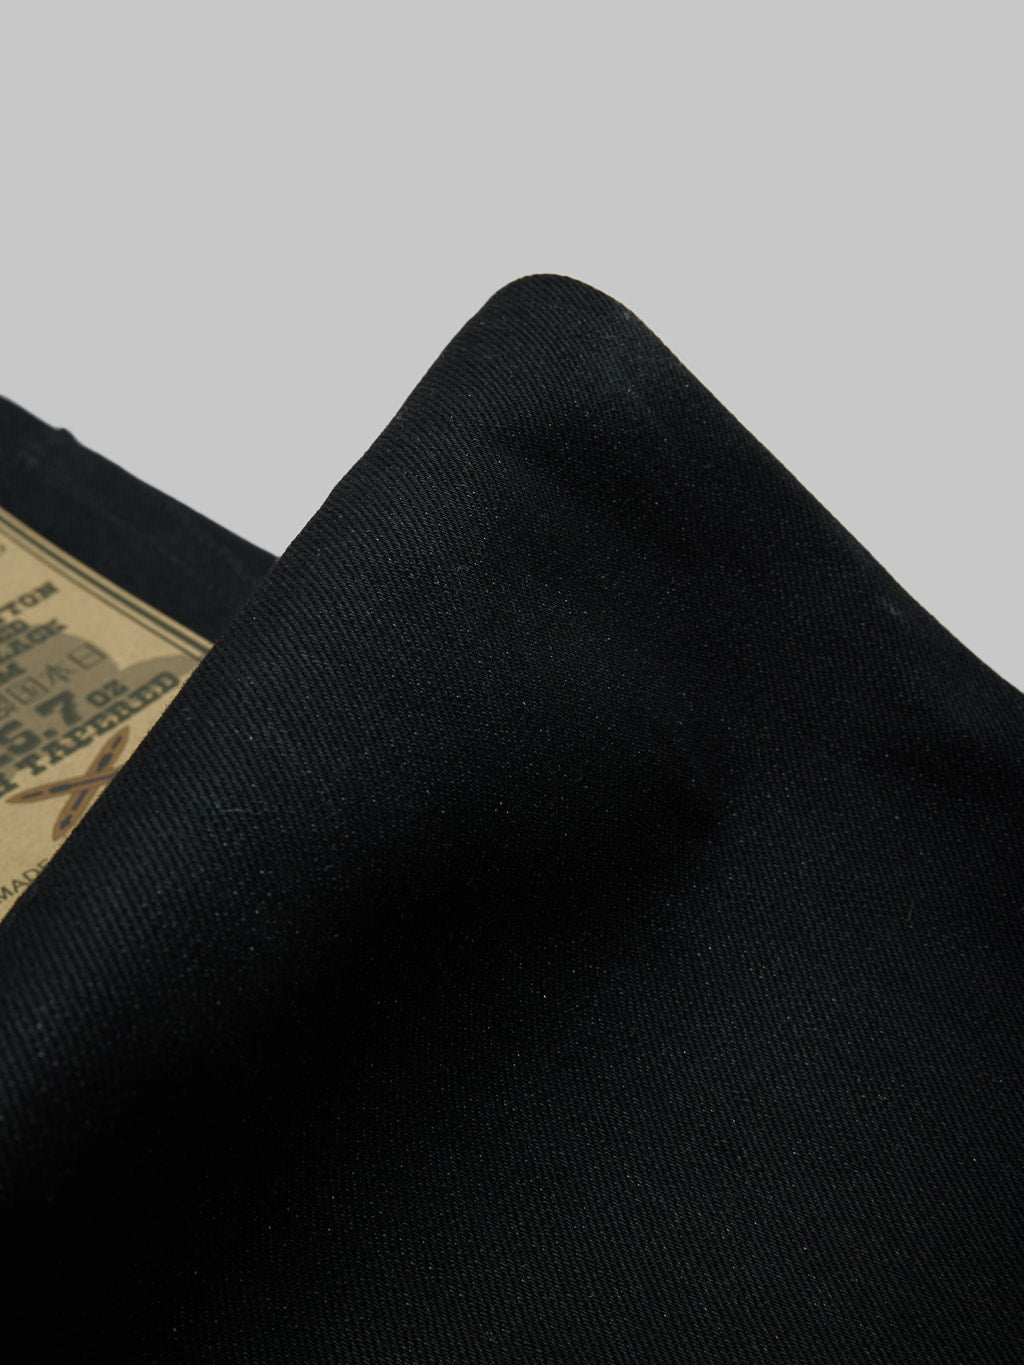 Momotaro 0605 B Black x Black Natural Tapered Jeans fabric